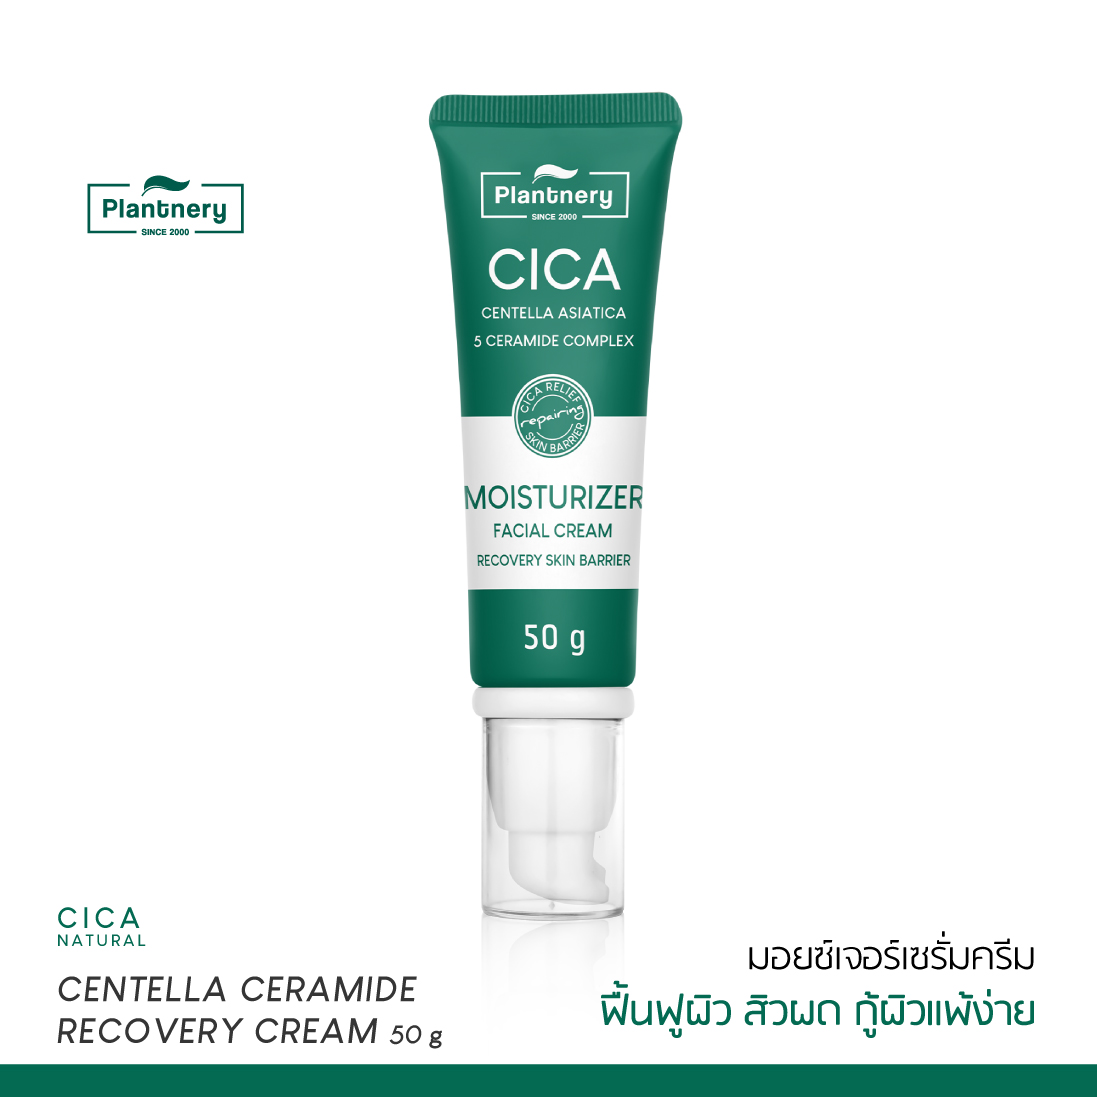 Cica Centella Ceramide Recovery Cream 50g